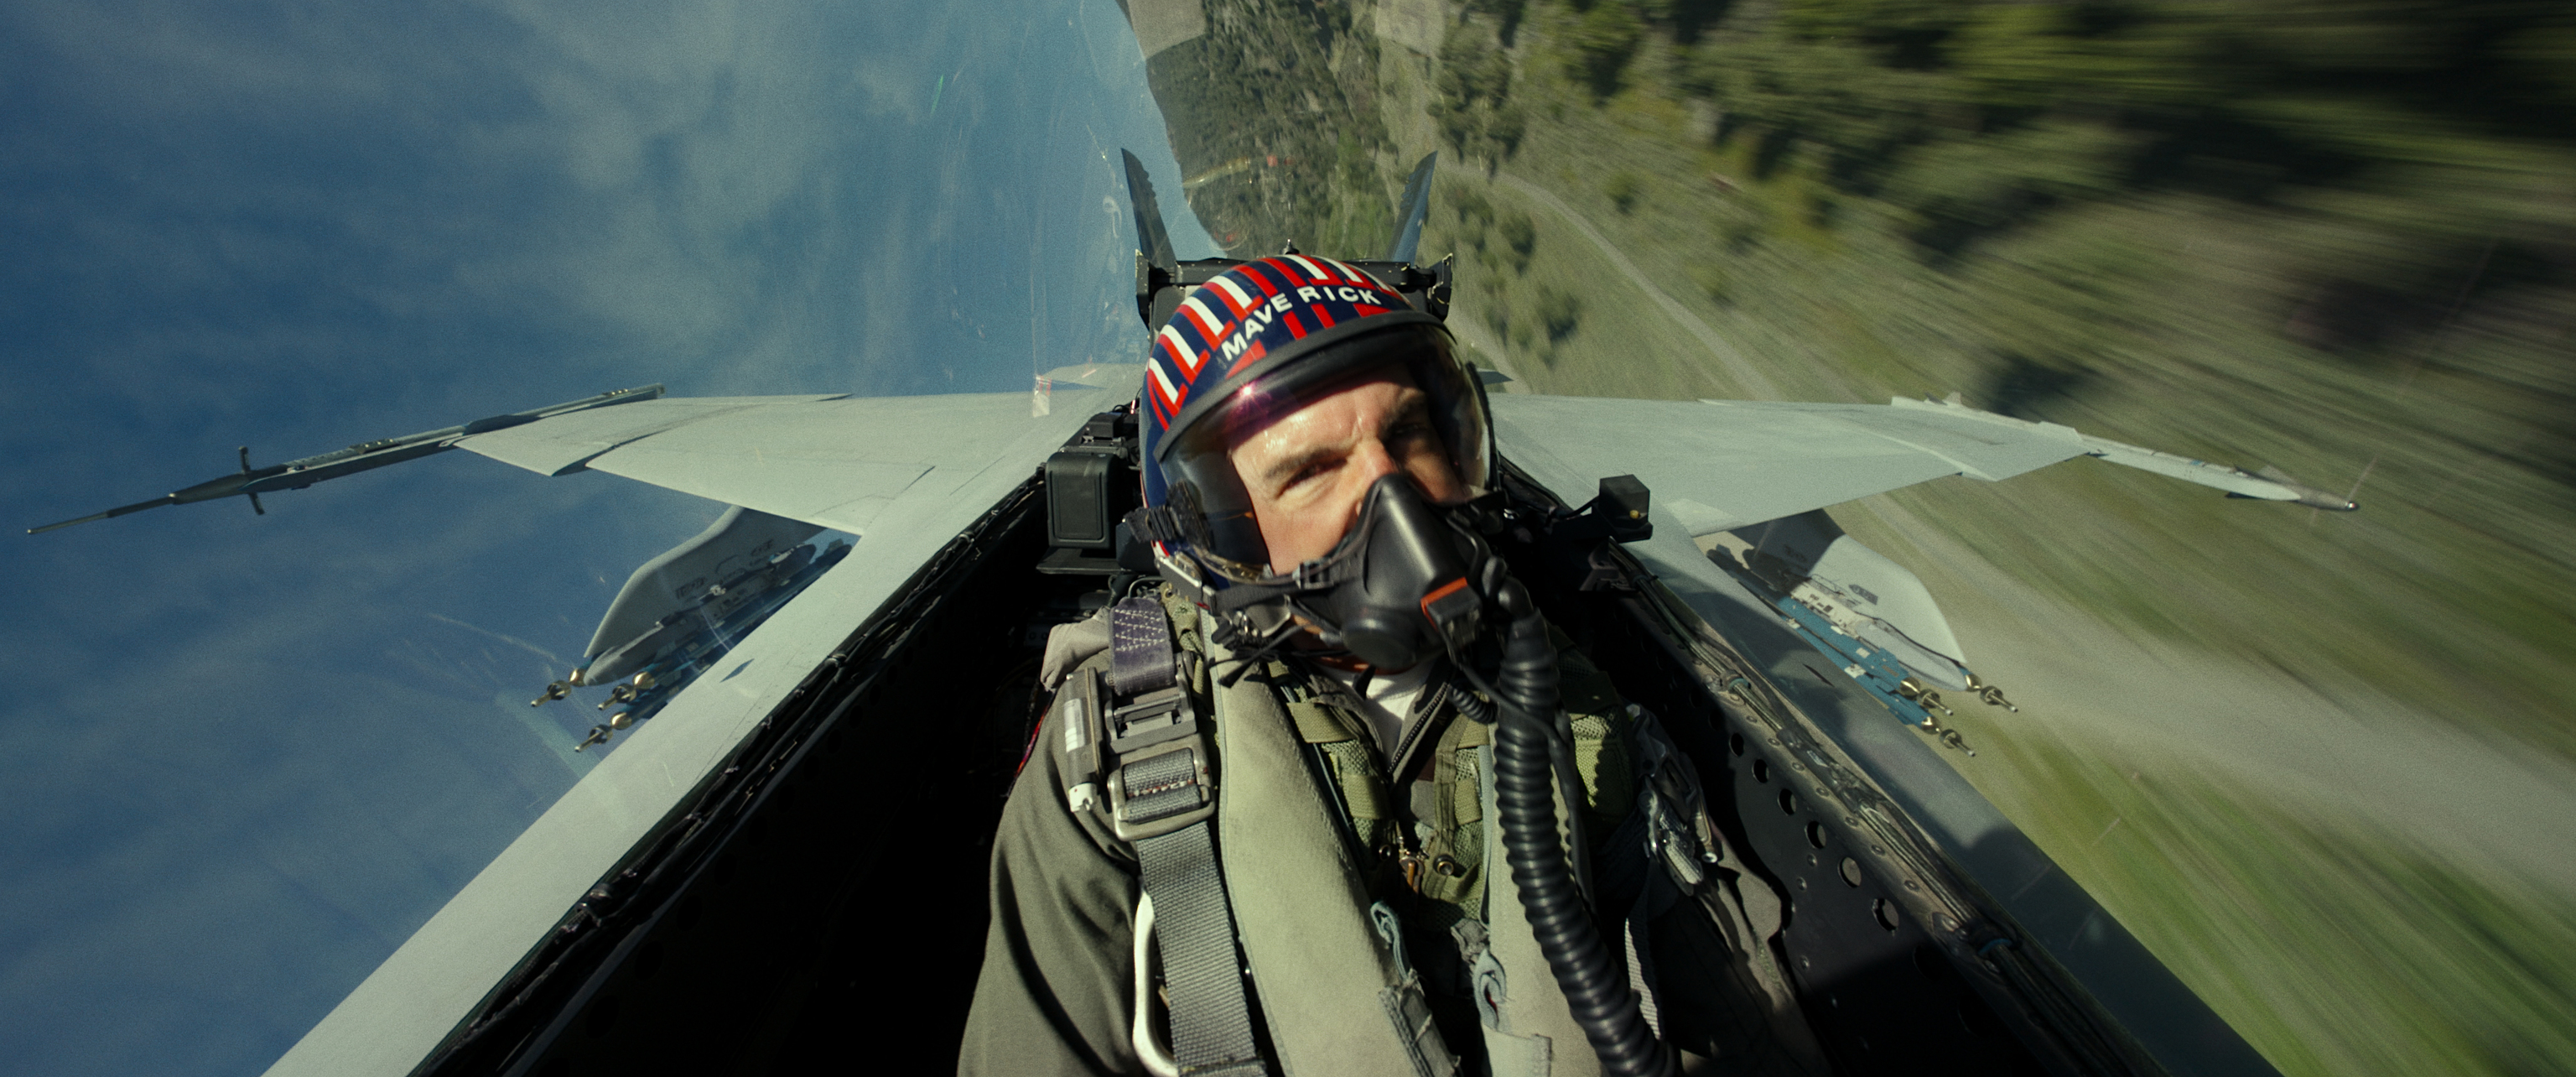 Maverick (Tom Cruise) in full flight.